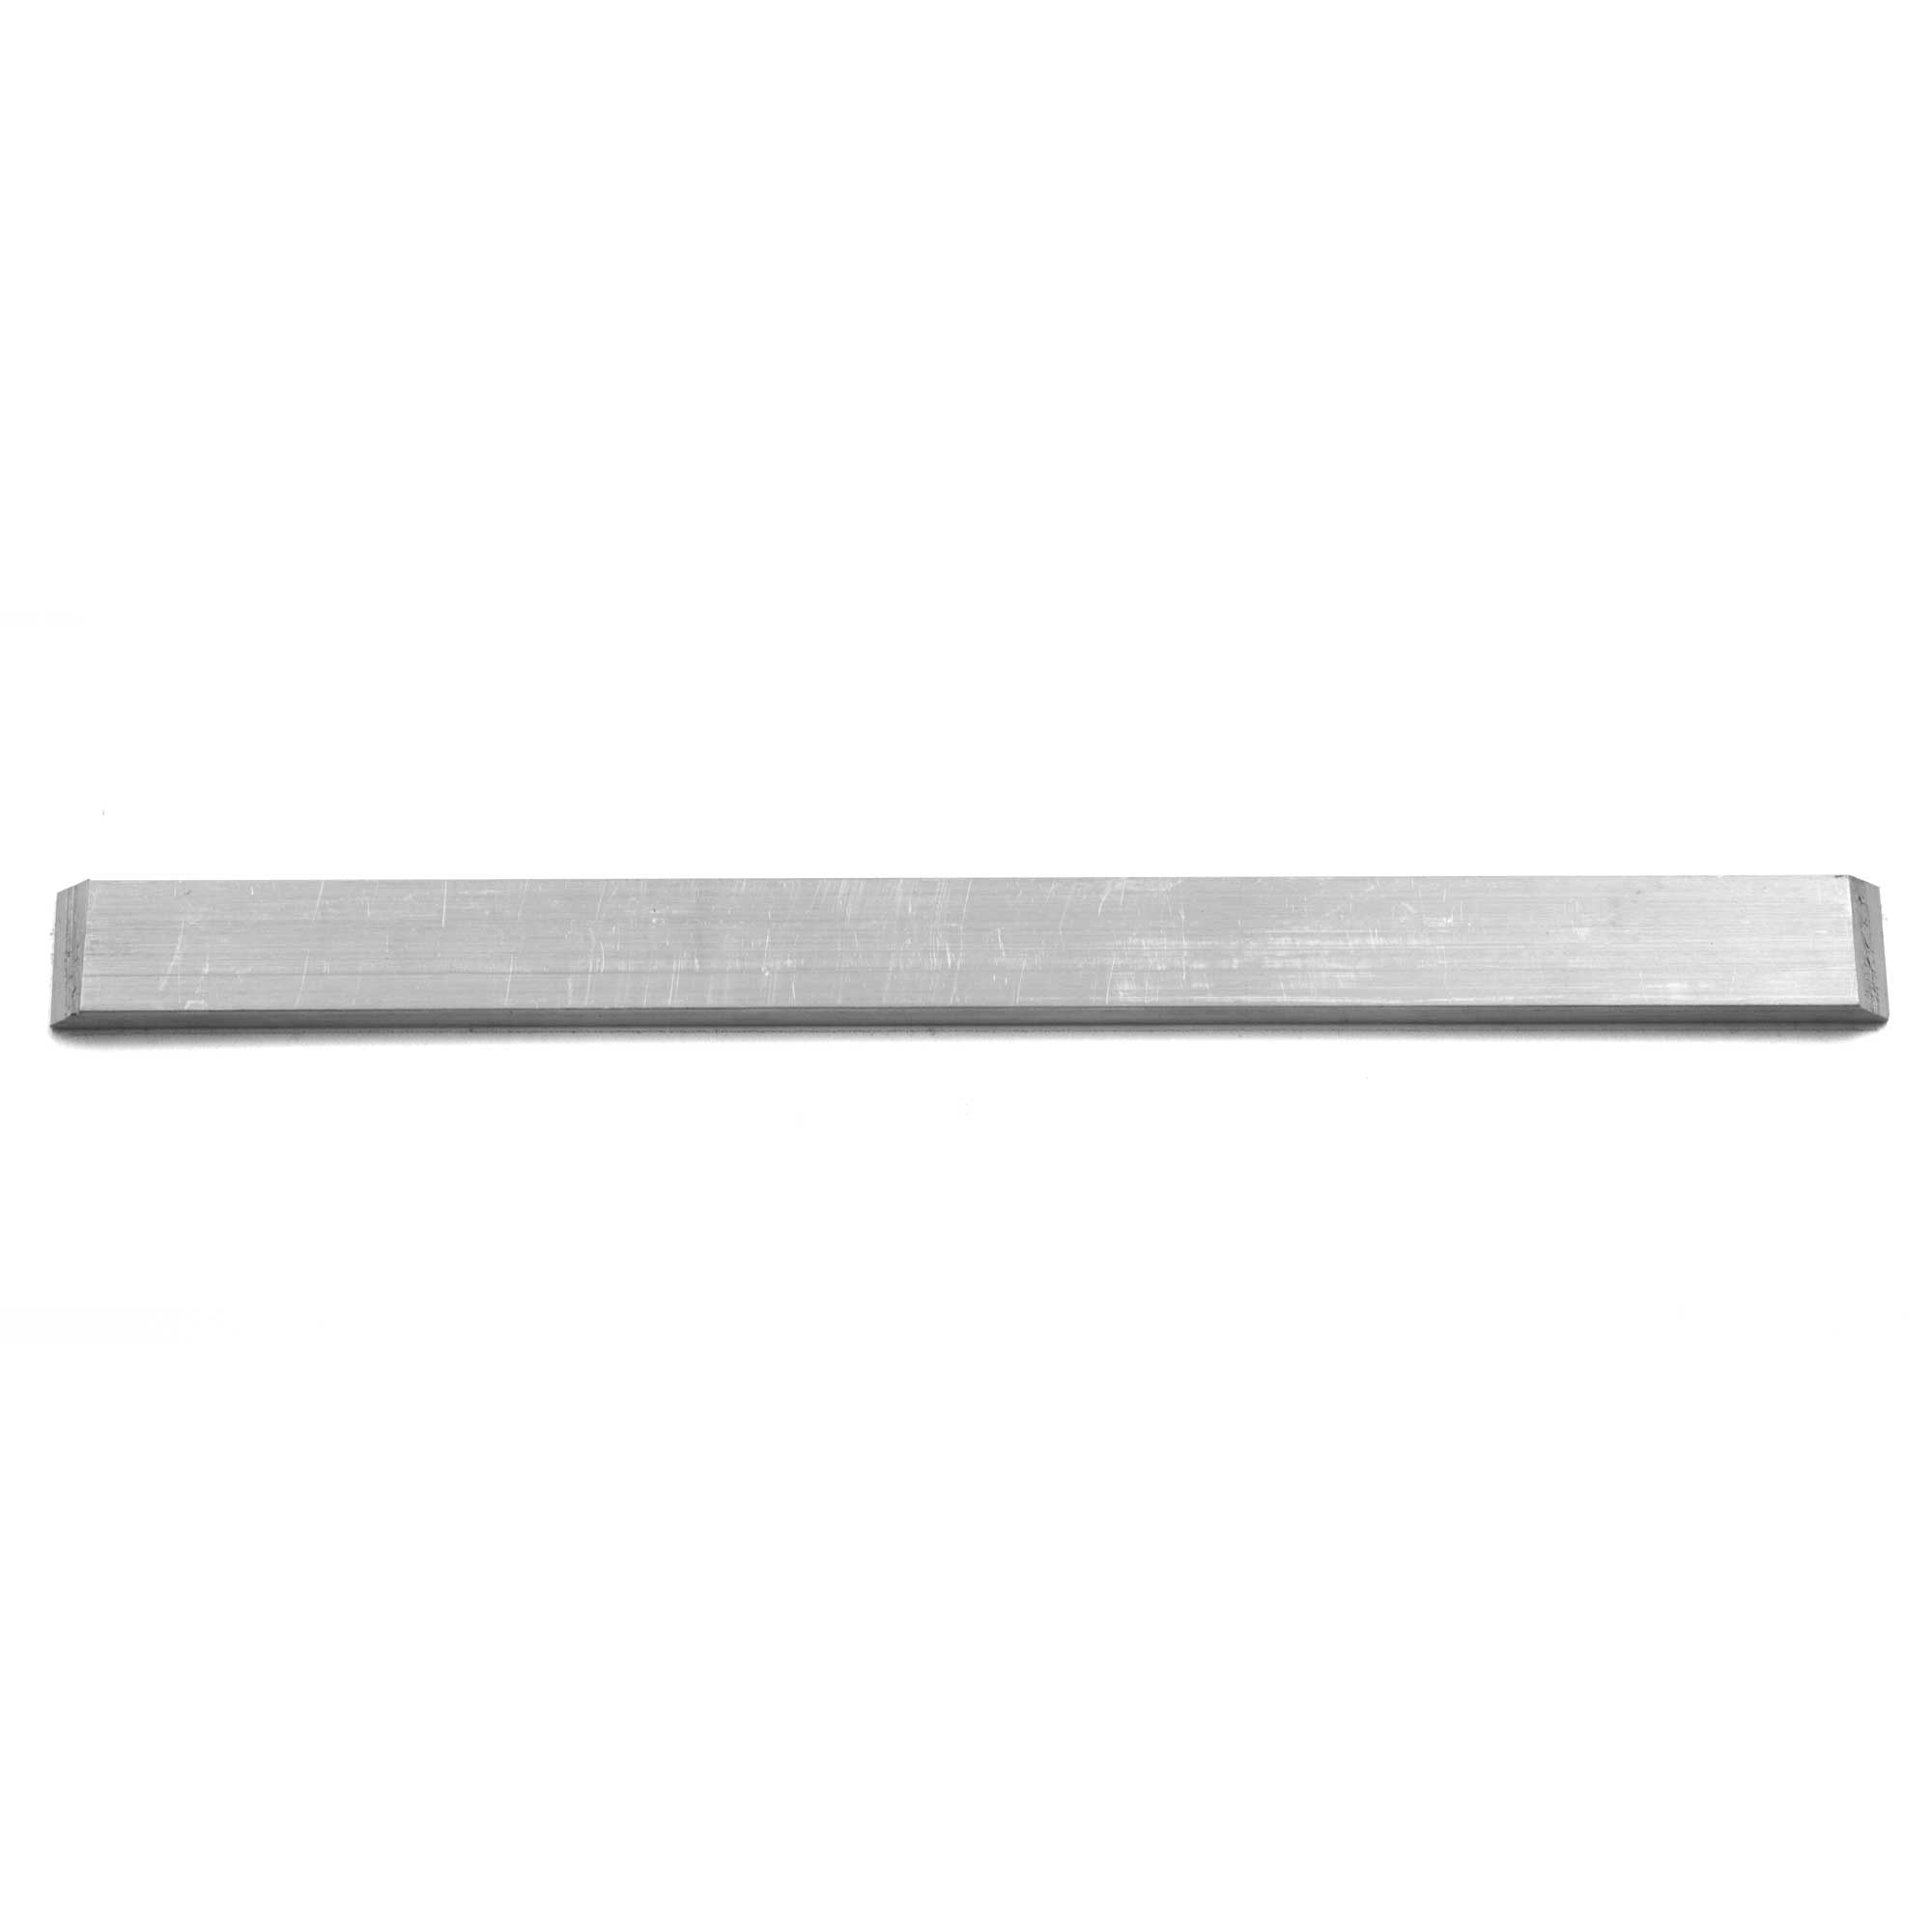 Anodized Aluminum Blank [160 x 25 x 5mm] [6 x 1]